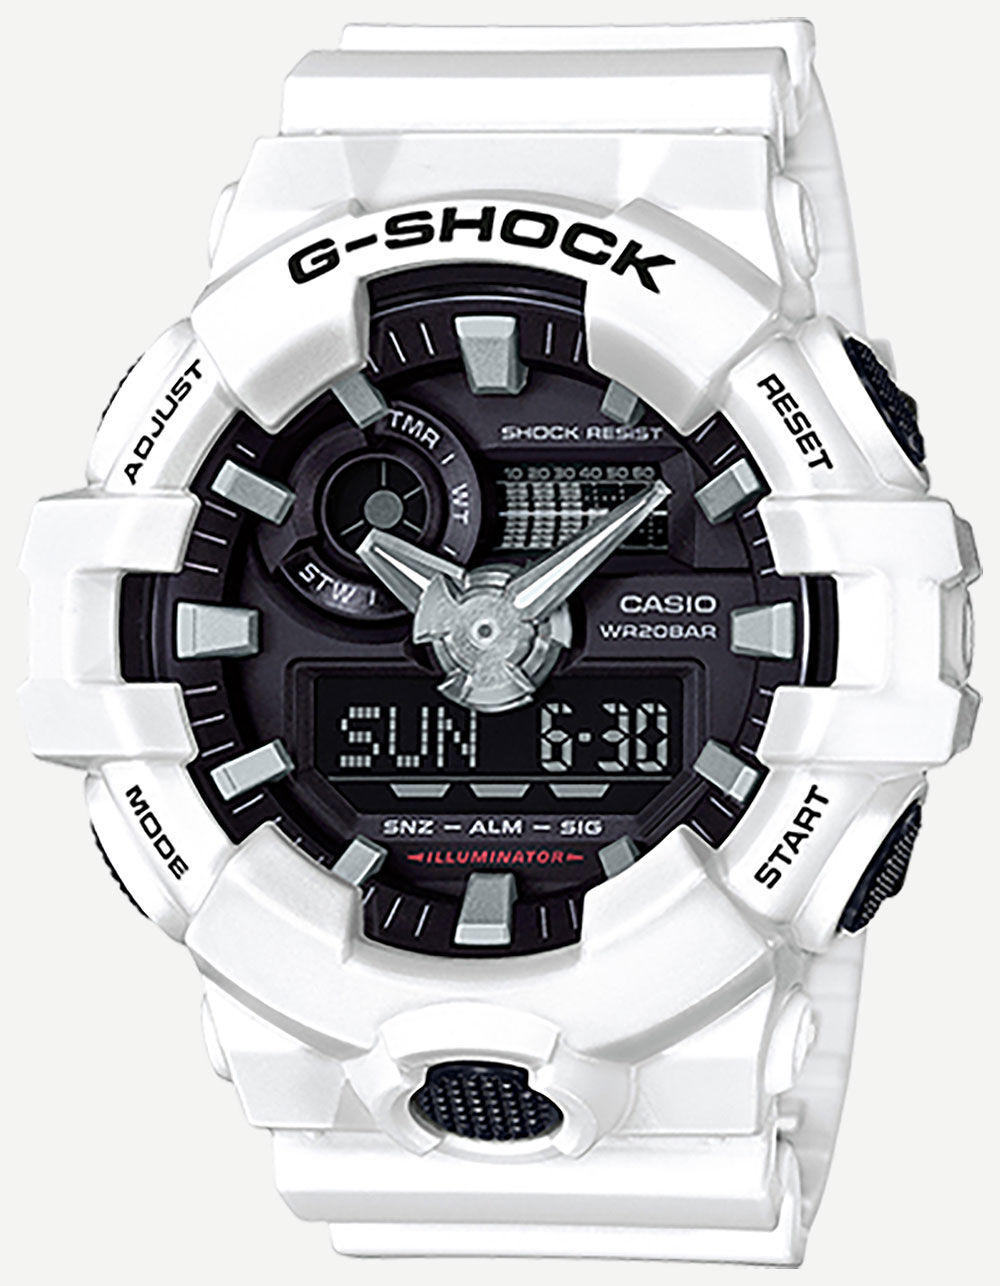 G-SHOCK GA700-7A Watch